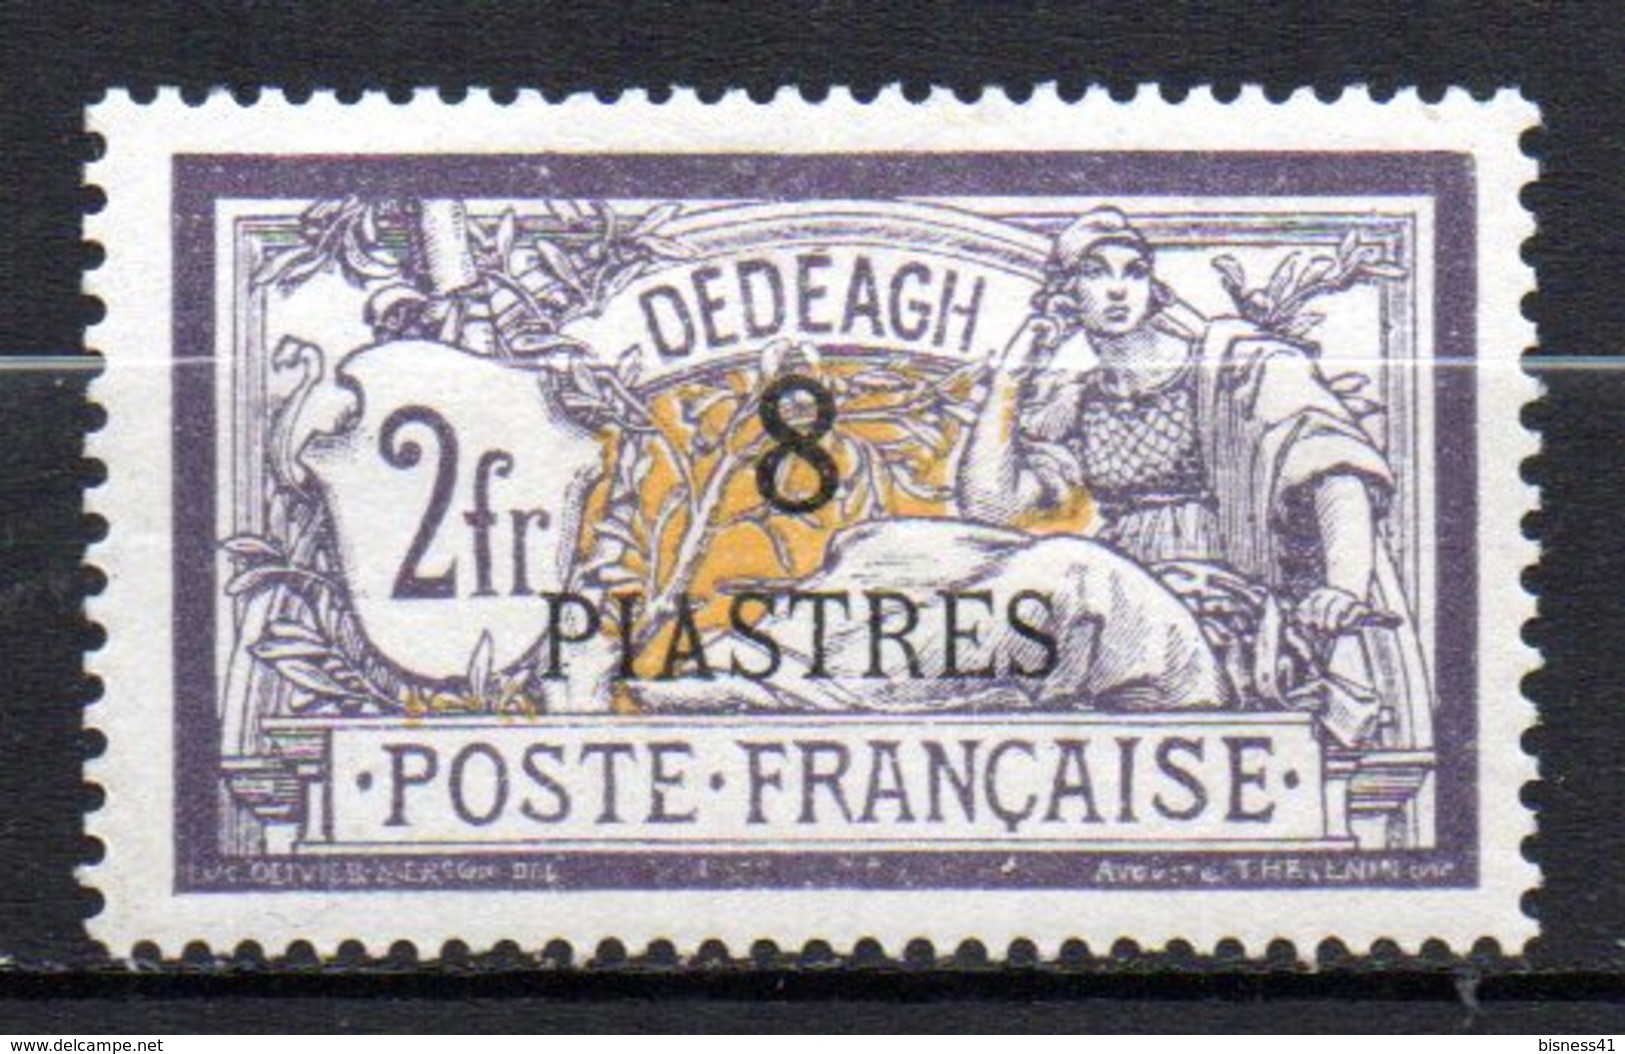 Col17  Colonie Dédéagh N° 16 Neuf X MH  Cote 35,00€ - Unused Stamps